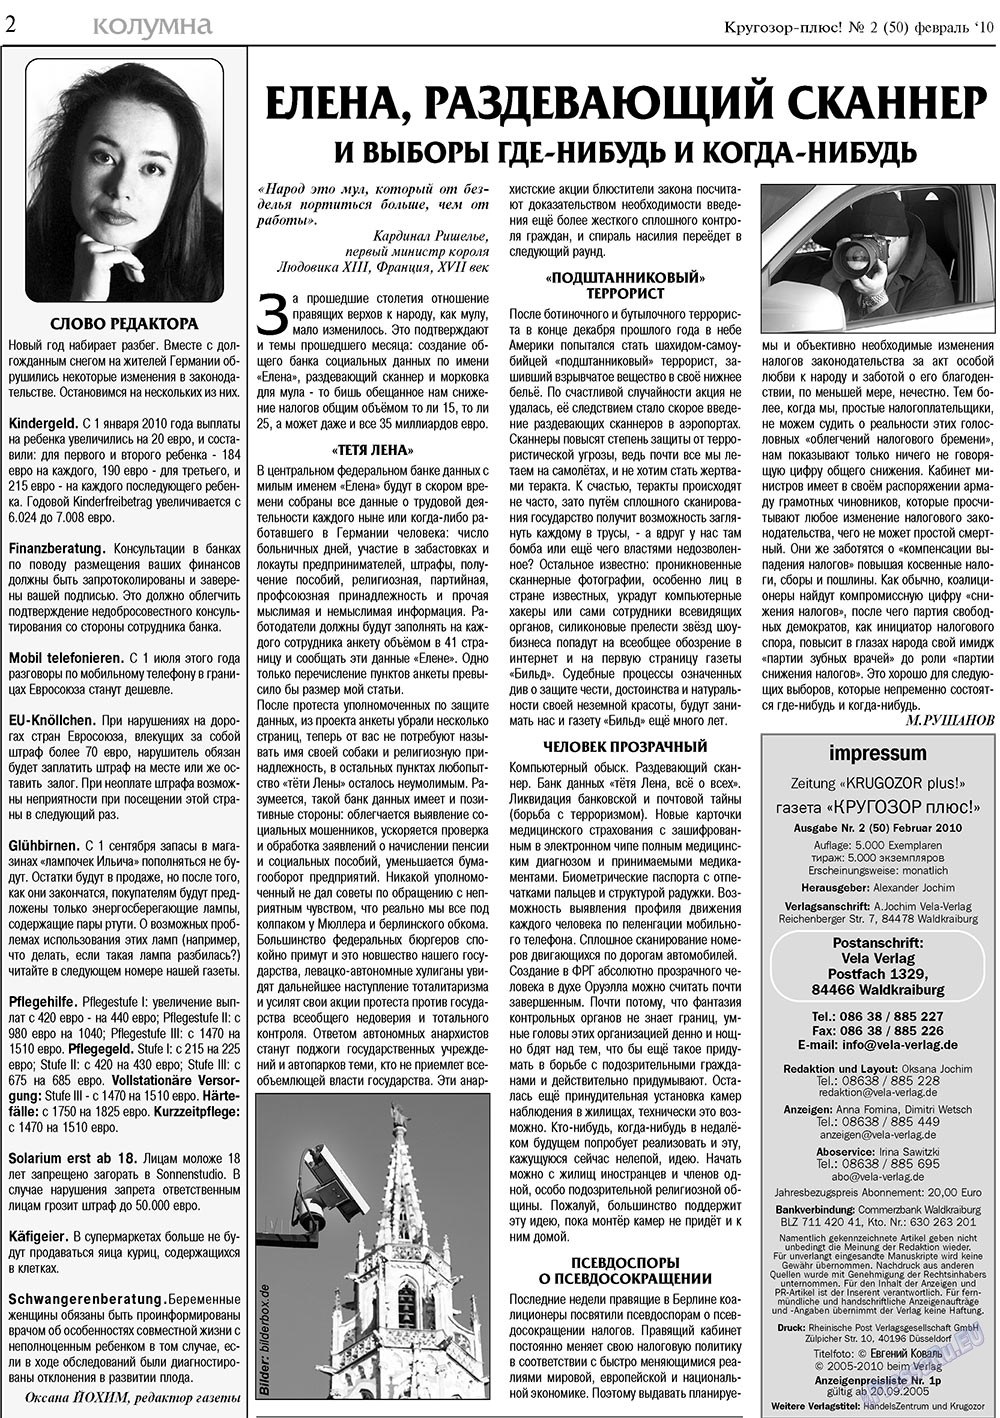 Кругозор плюс! (газета). 2010 год, номер 2, стр. 2